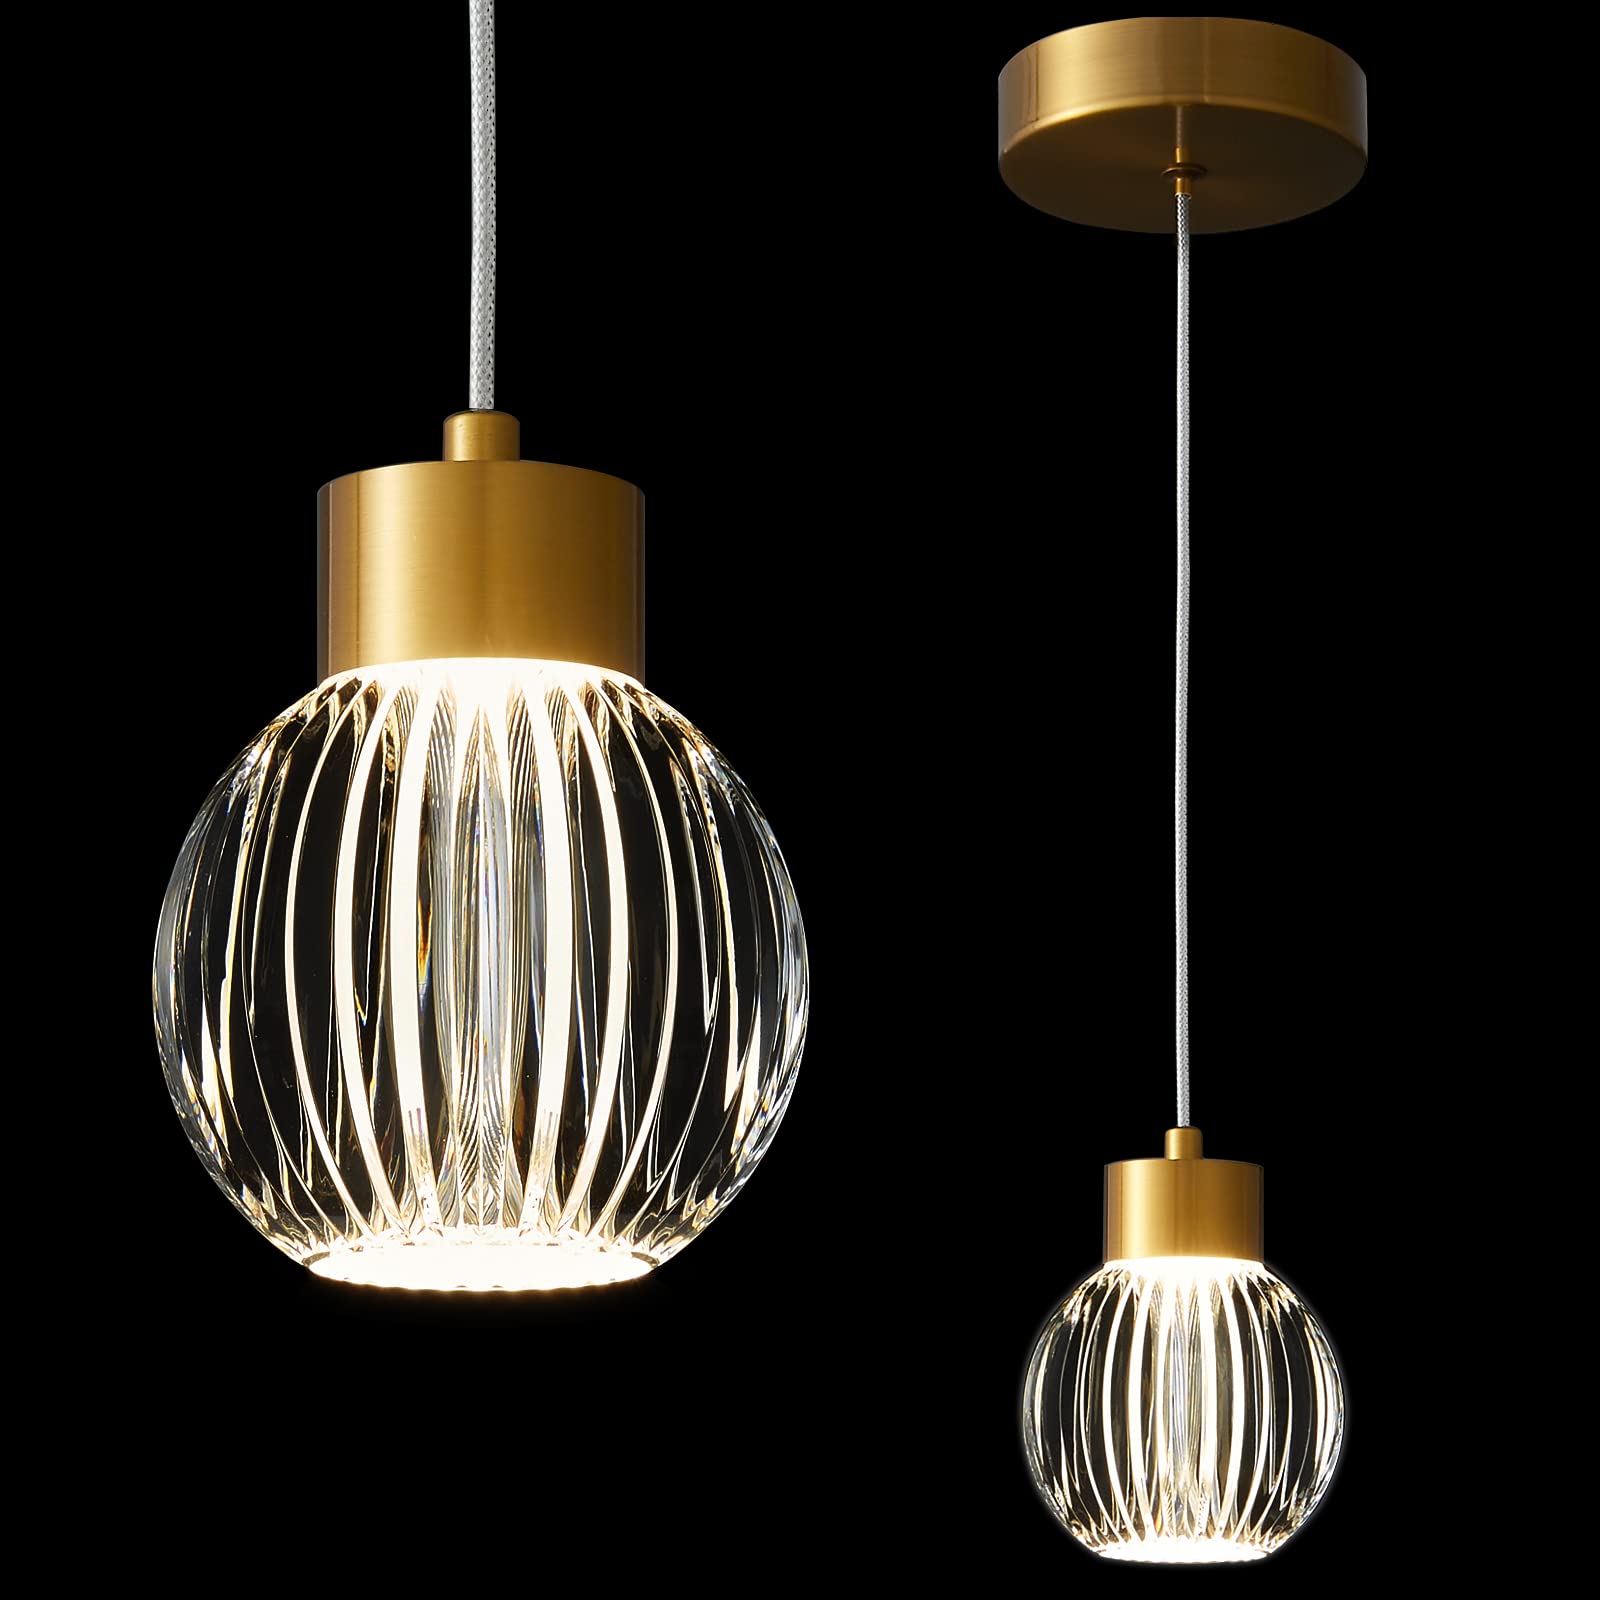 ADcTHOME Modern LED Spherical Pendant Lighting gold Mini Pendant Light with Acrylic Shade, Adjustable ceiling Hanging Lamp Fixtu